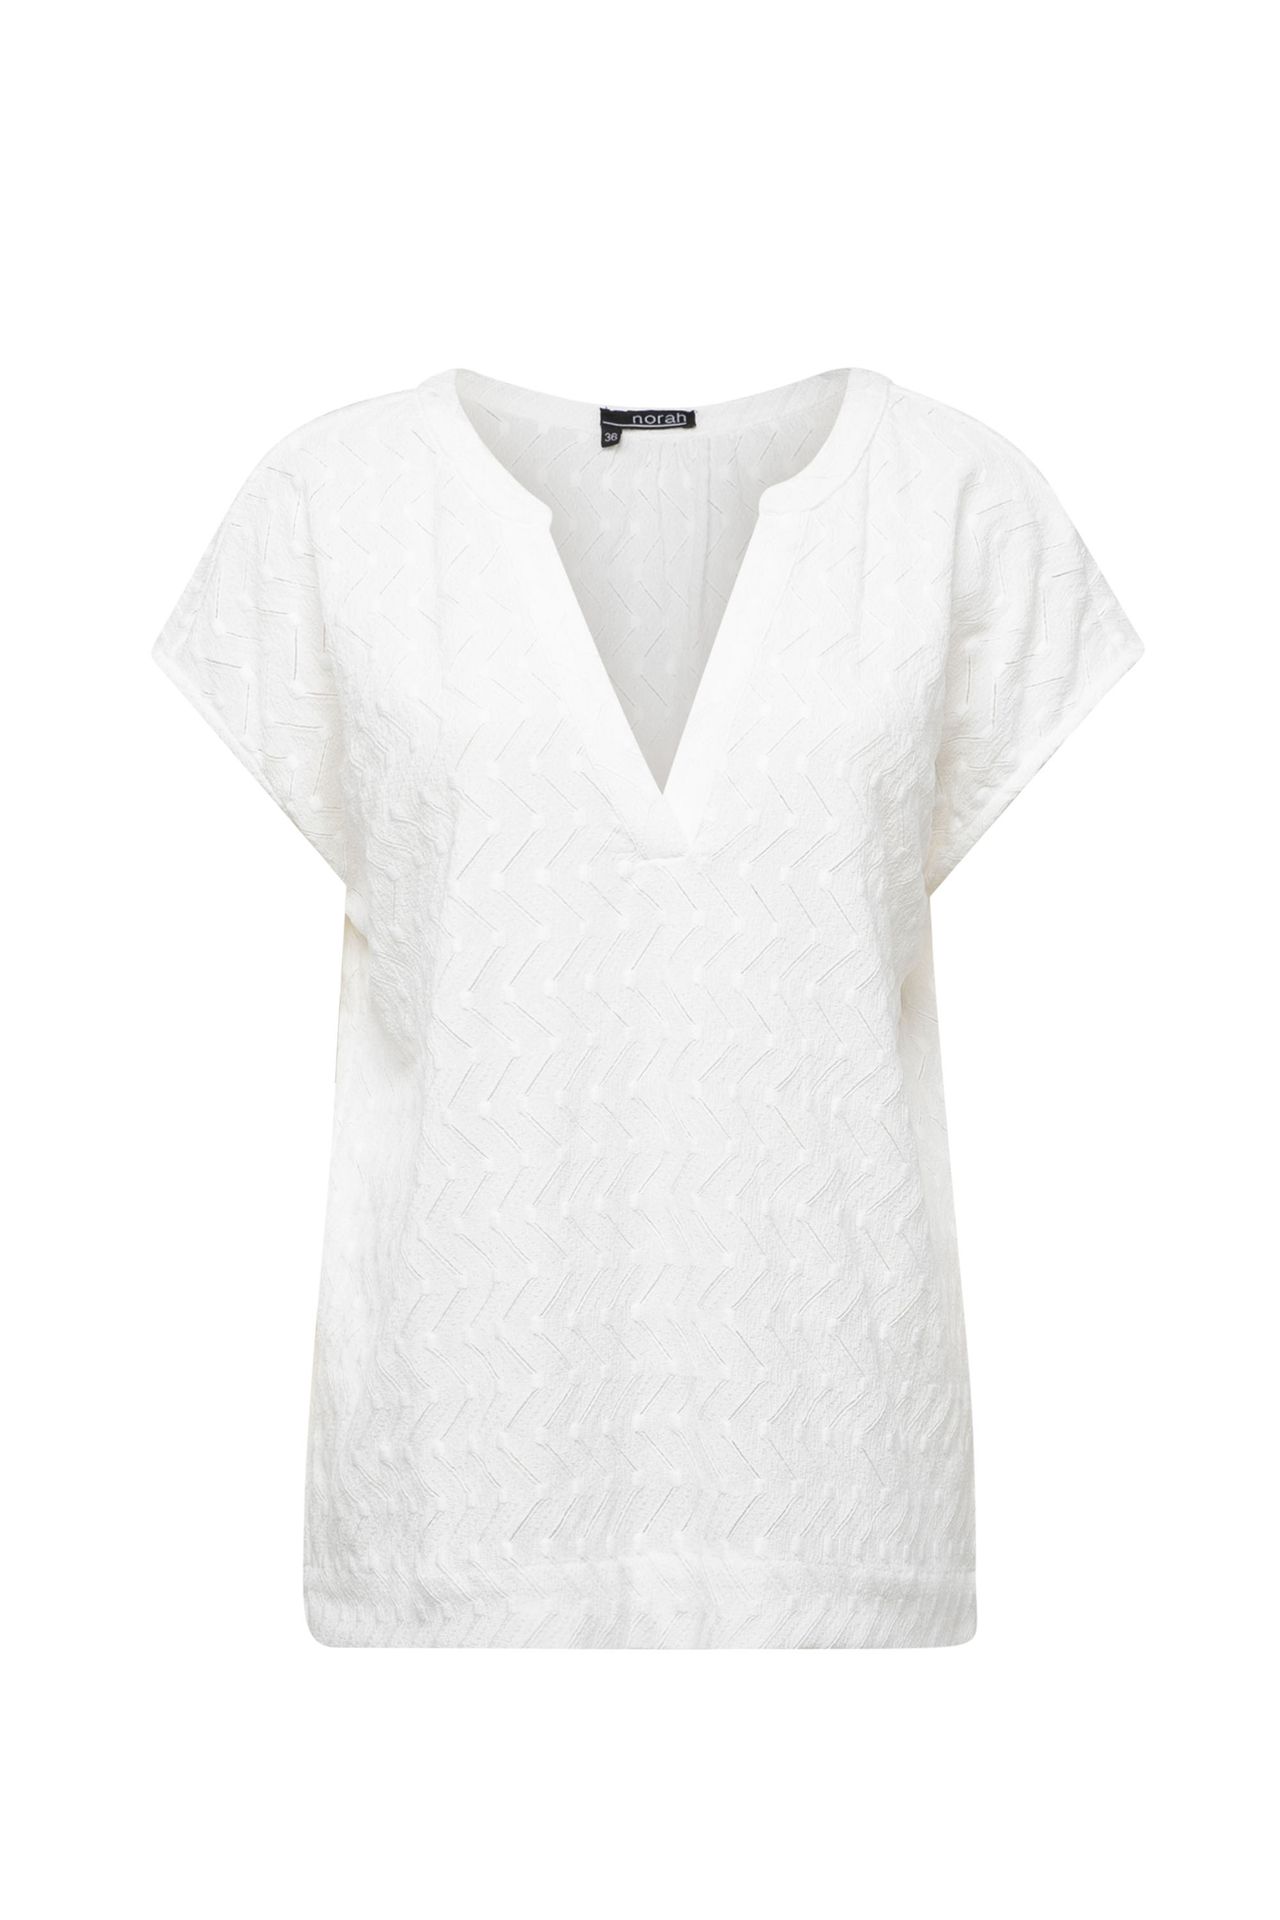 Norah Witte blouse off-white 213882-101